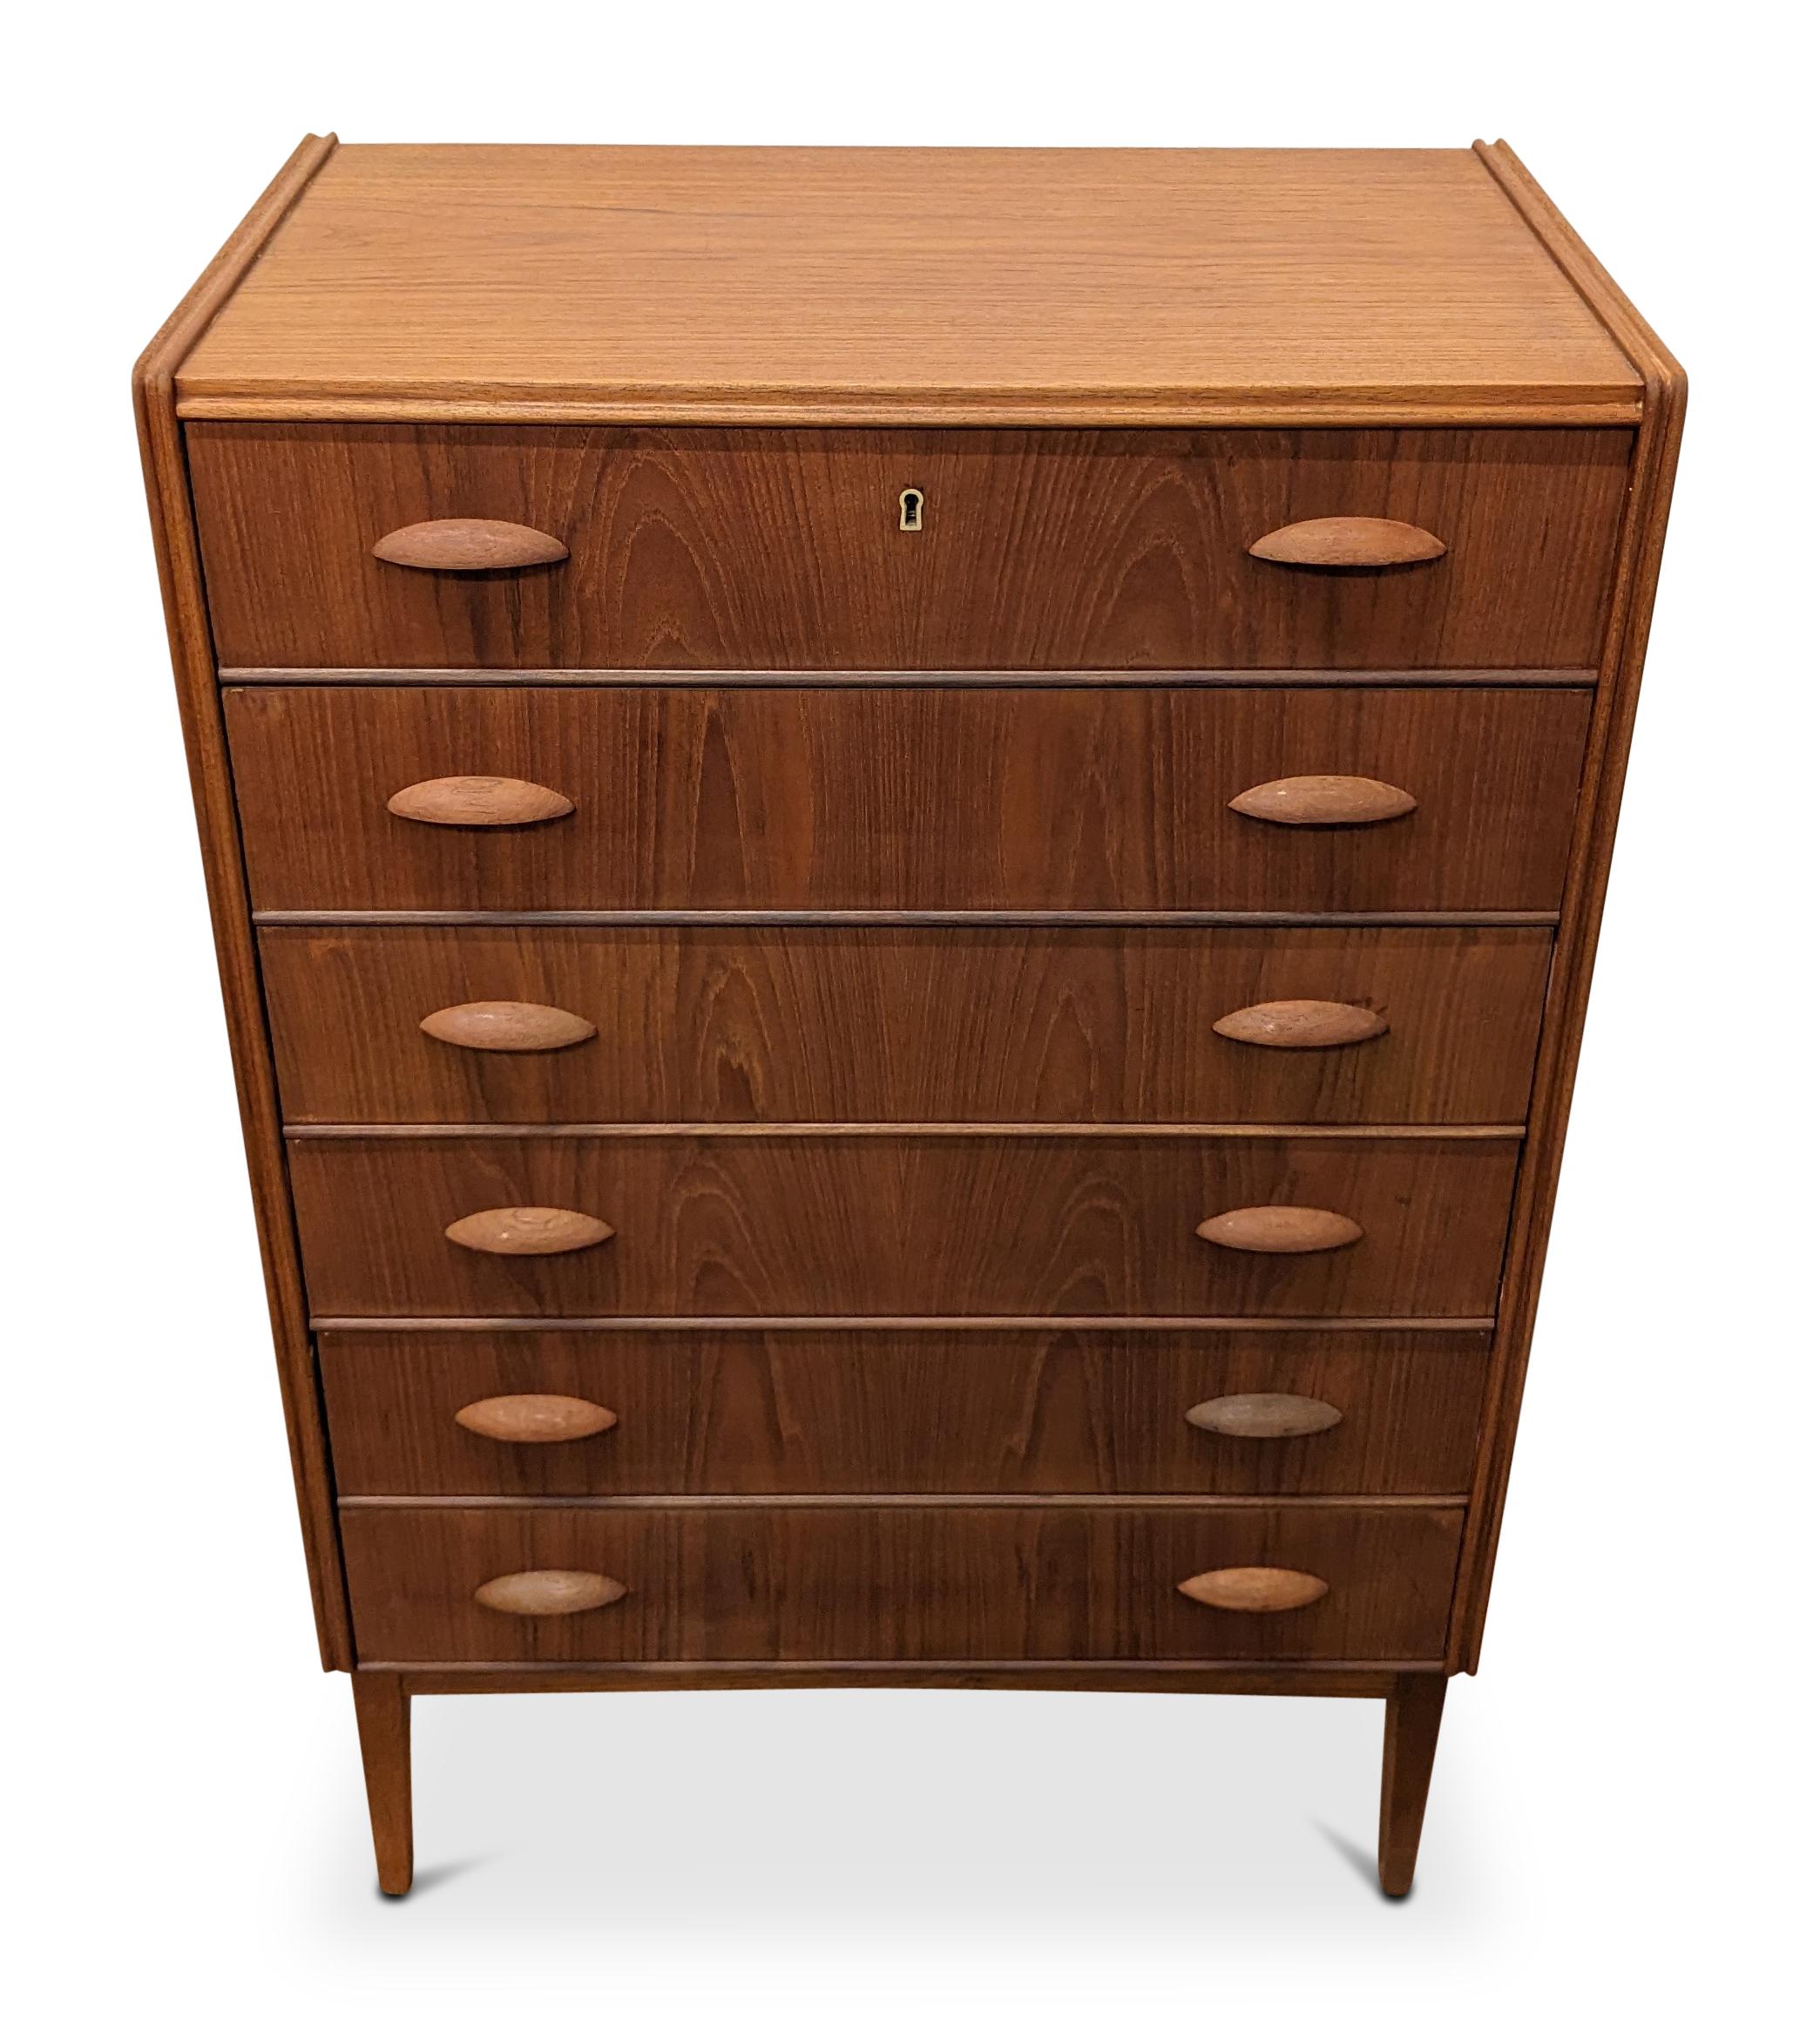 Vintage Danish Mid Century Teak Dresser - 122369 In Good Condition For Sale In Jersey City, NJ